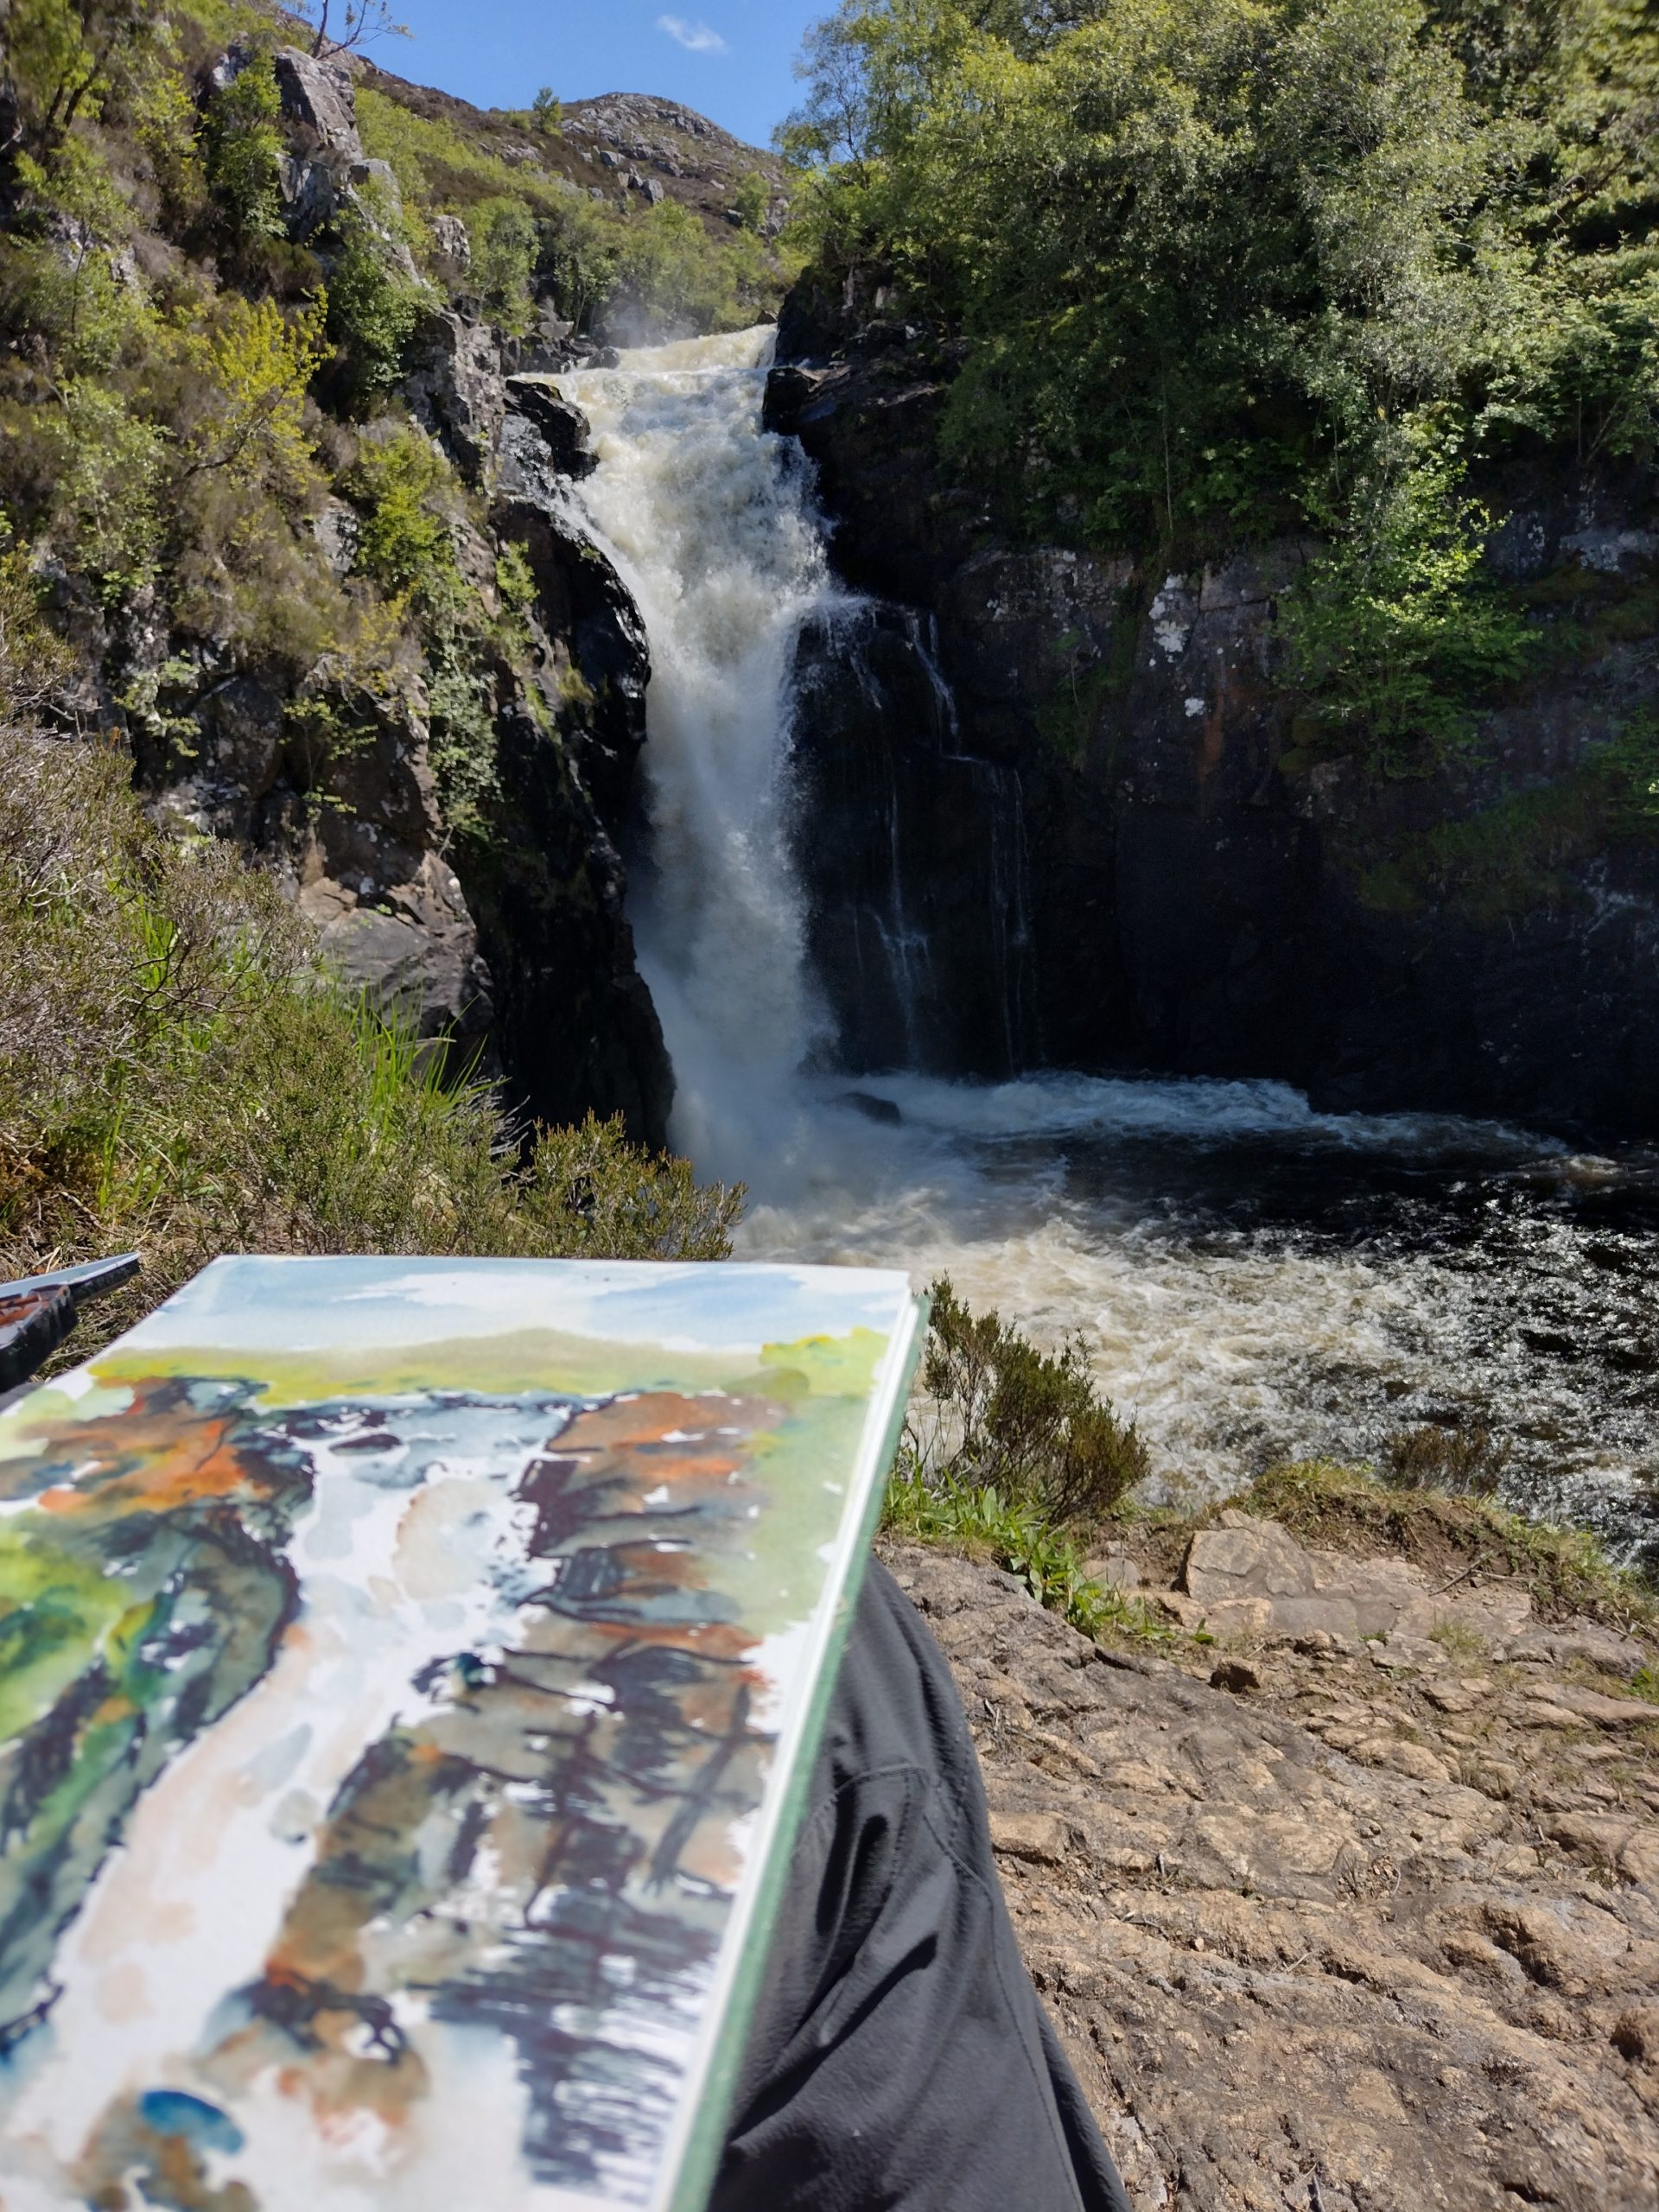 Painting the Kirkaig Falls